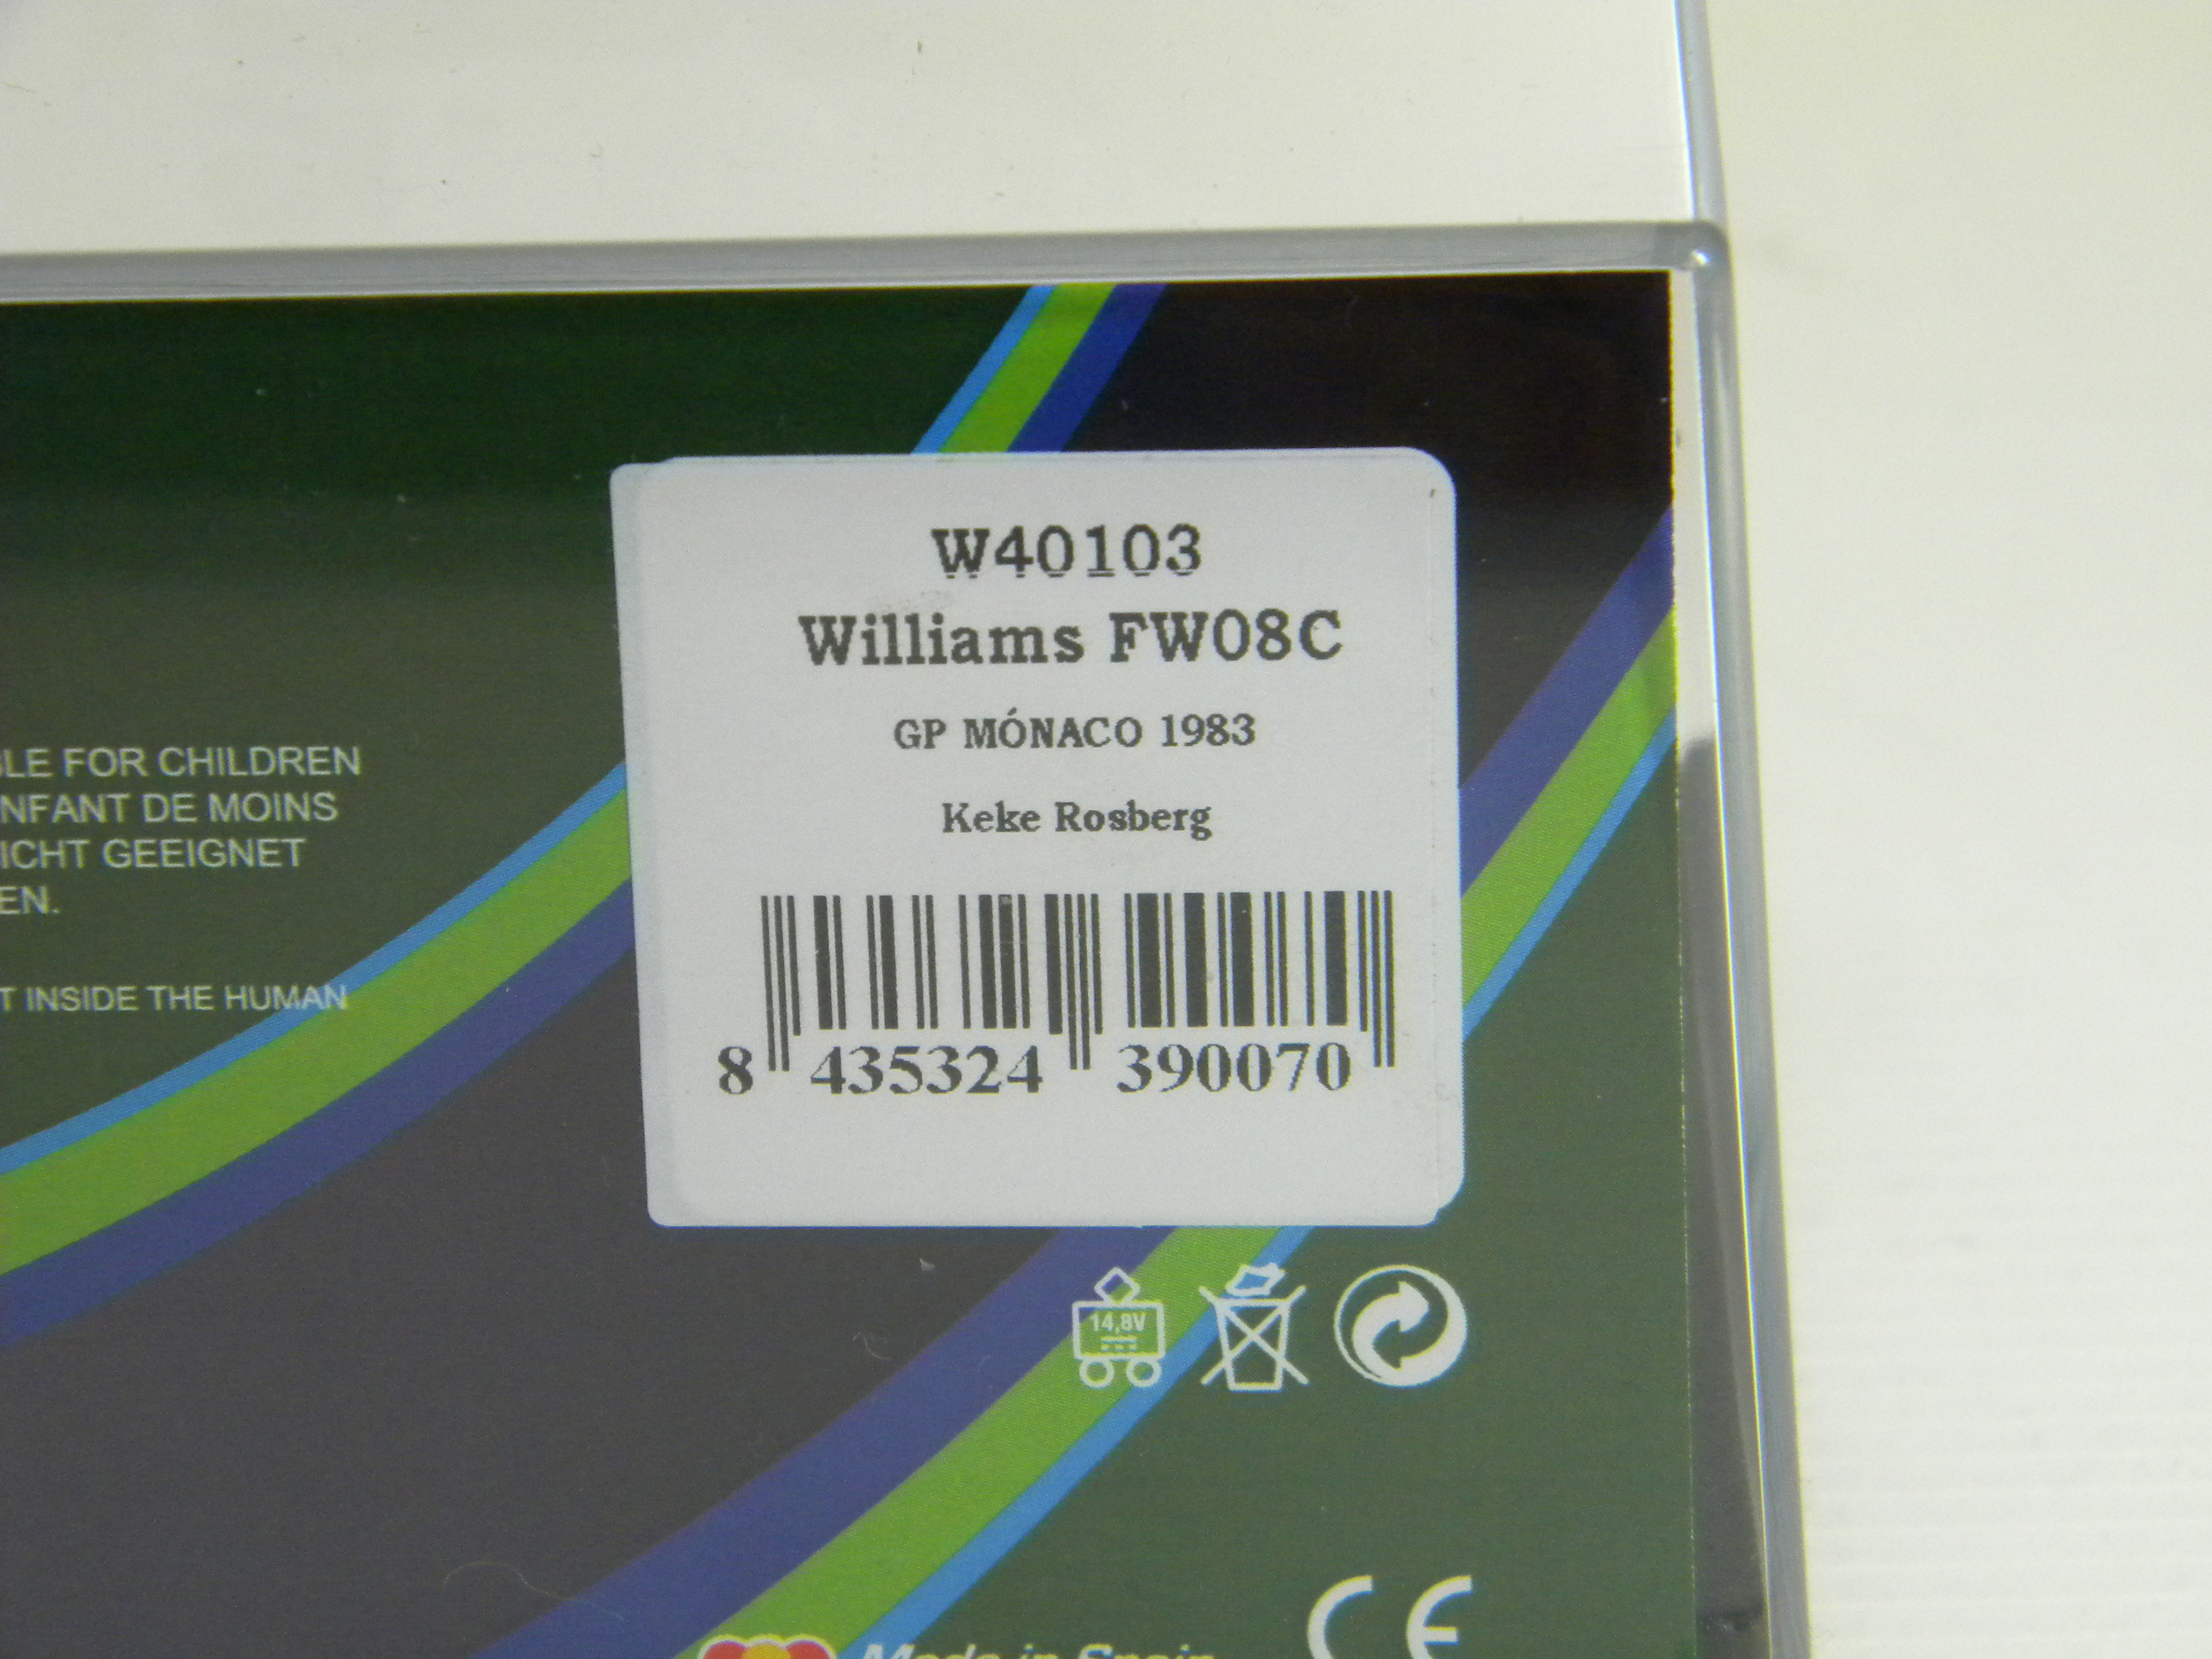 Williams (W40103